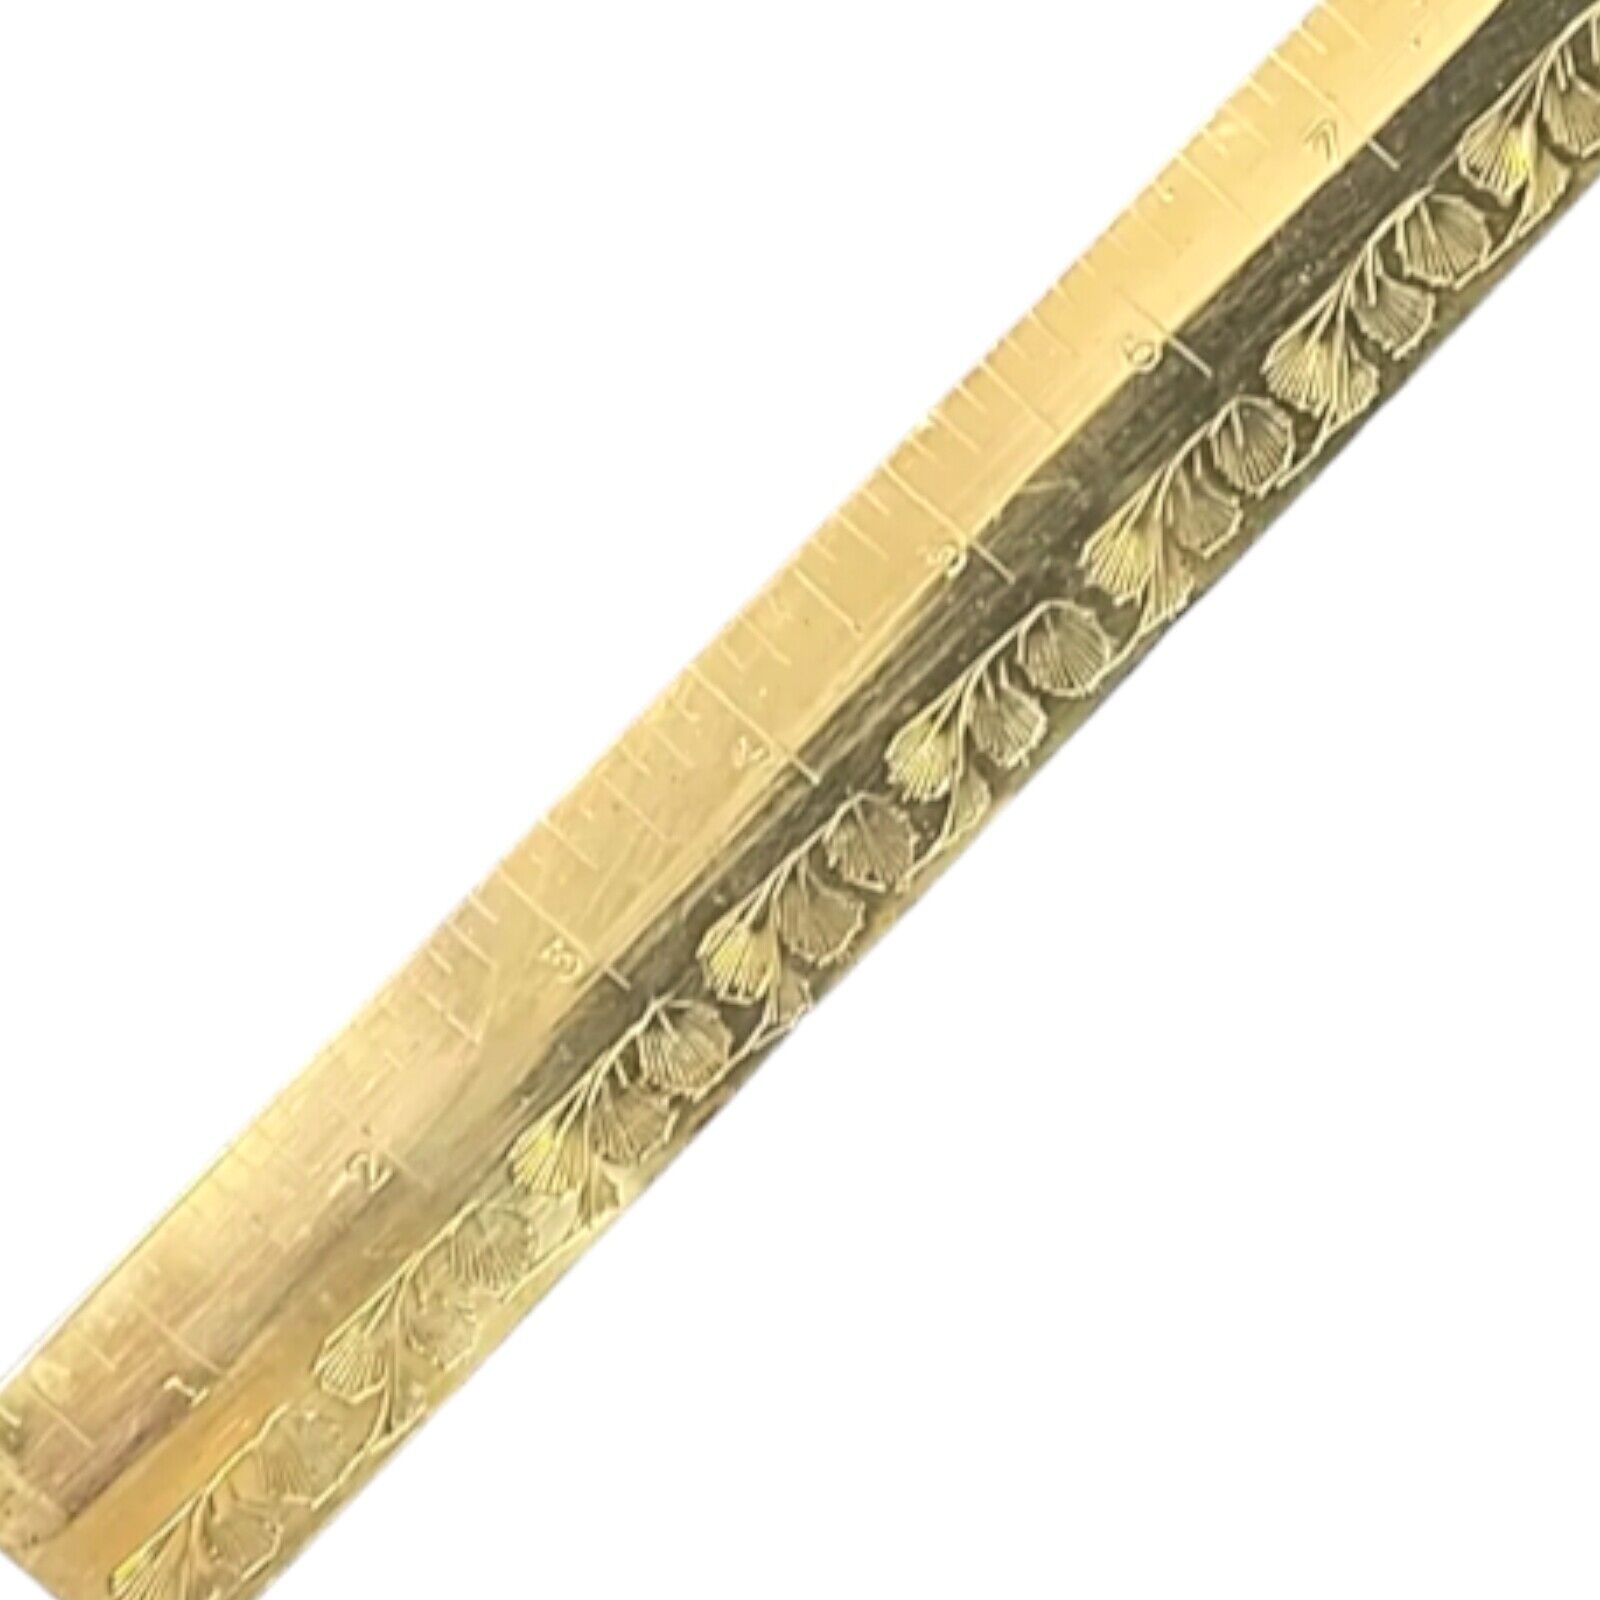 Sarna India Brass Ruler Rare Vintage Handmade Etched Leaf Frond One of a Kind